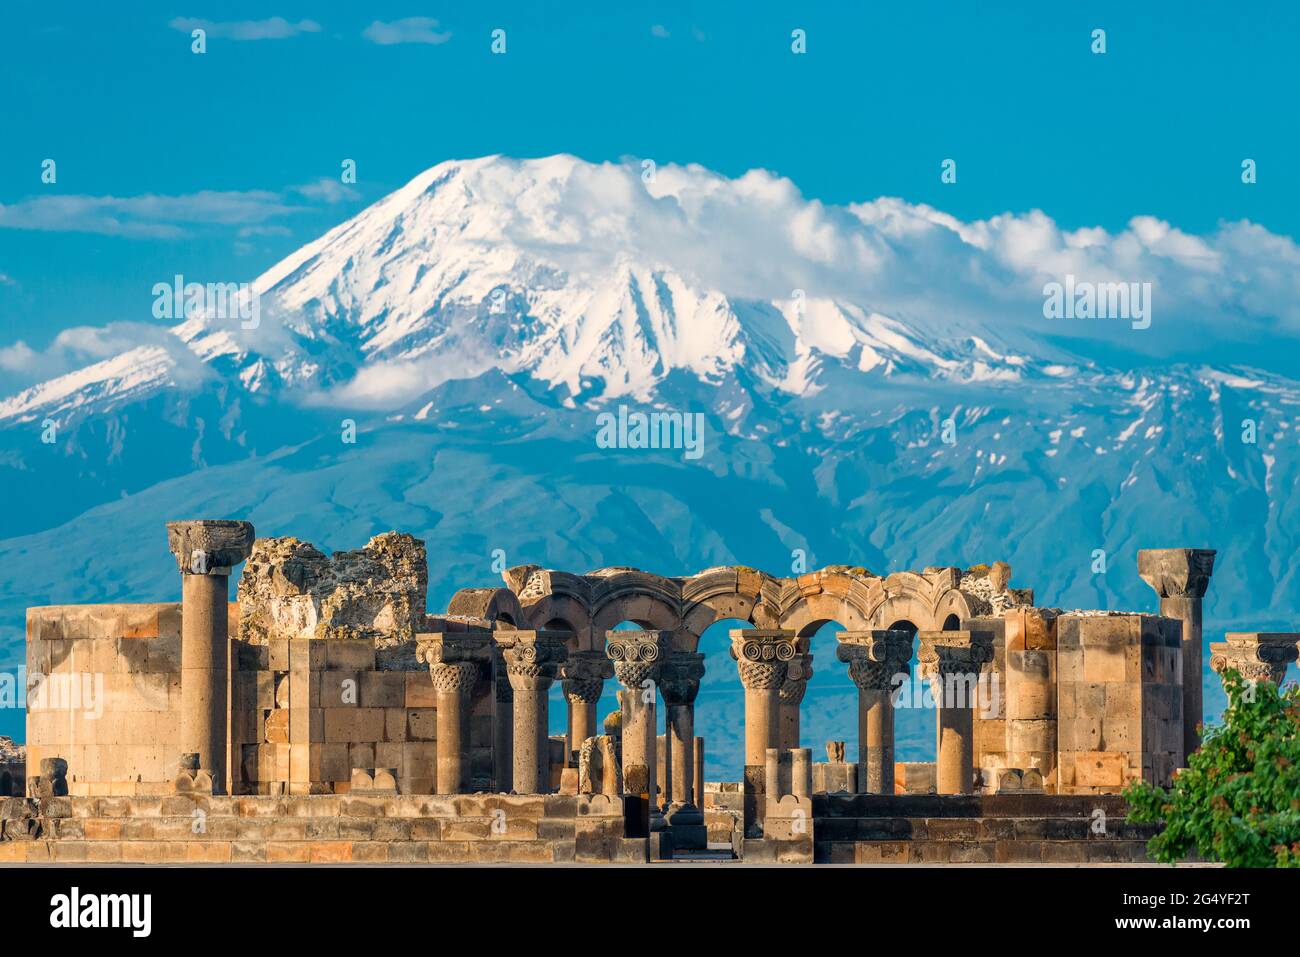 High snowy Ararat and the ruins of Zvartnots temple a landmark of Armenia Stock Photo